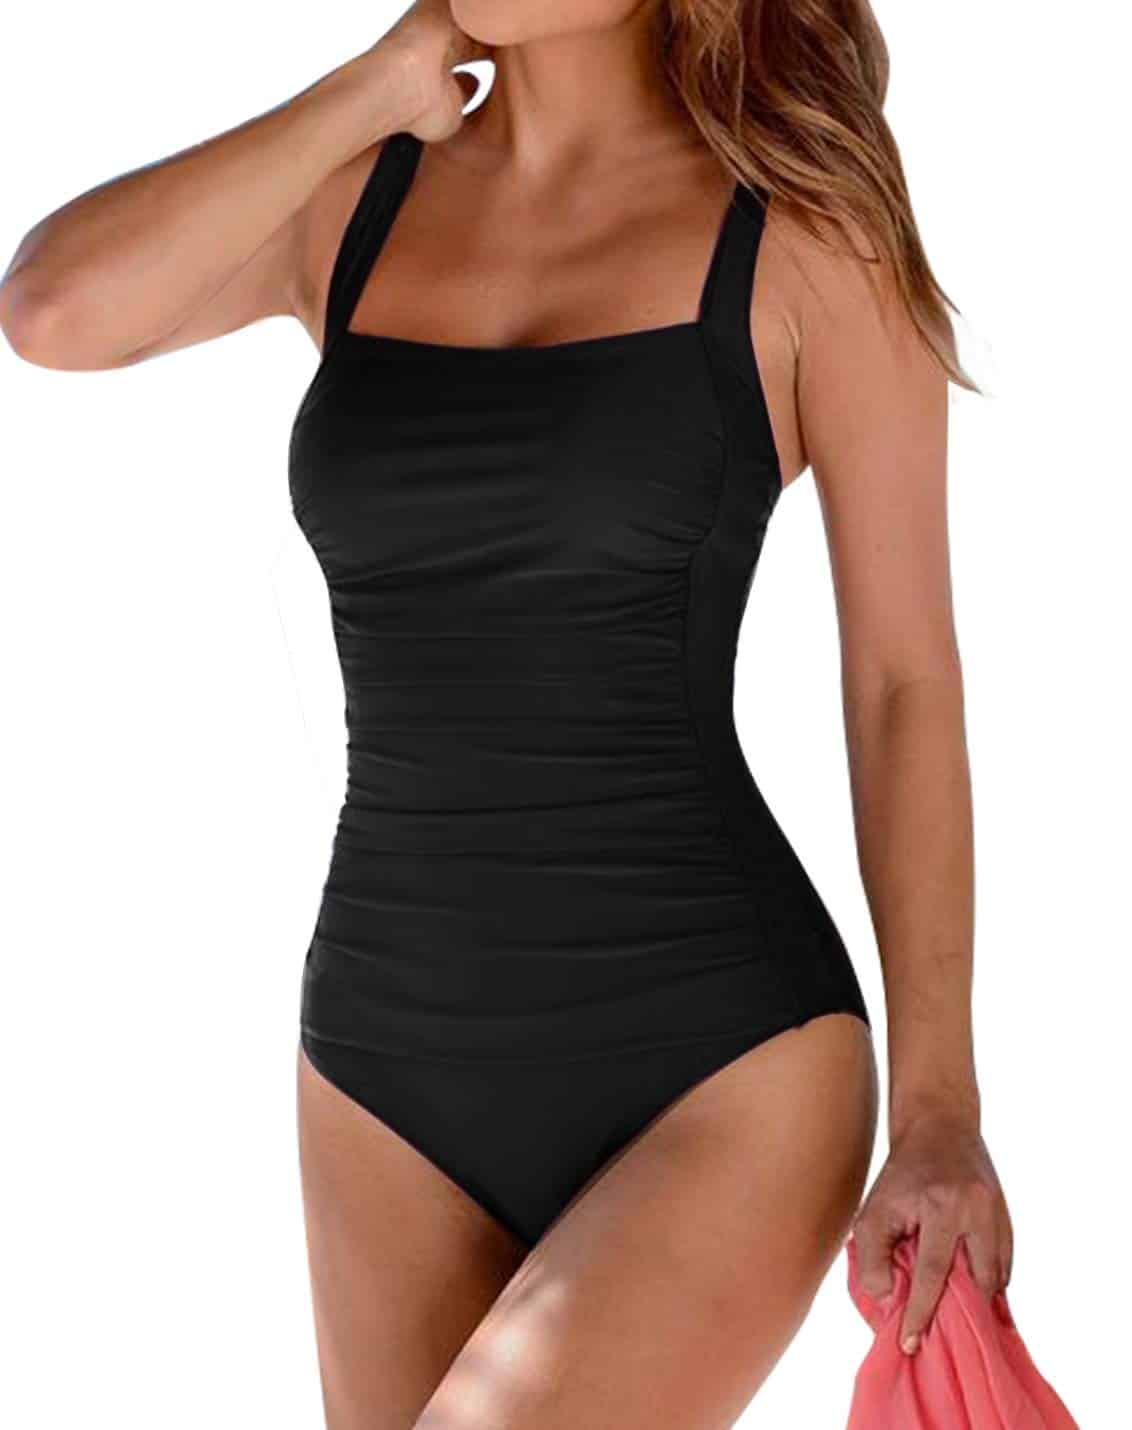 model wearing black Upopby vintage swimsuit